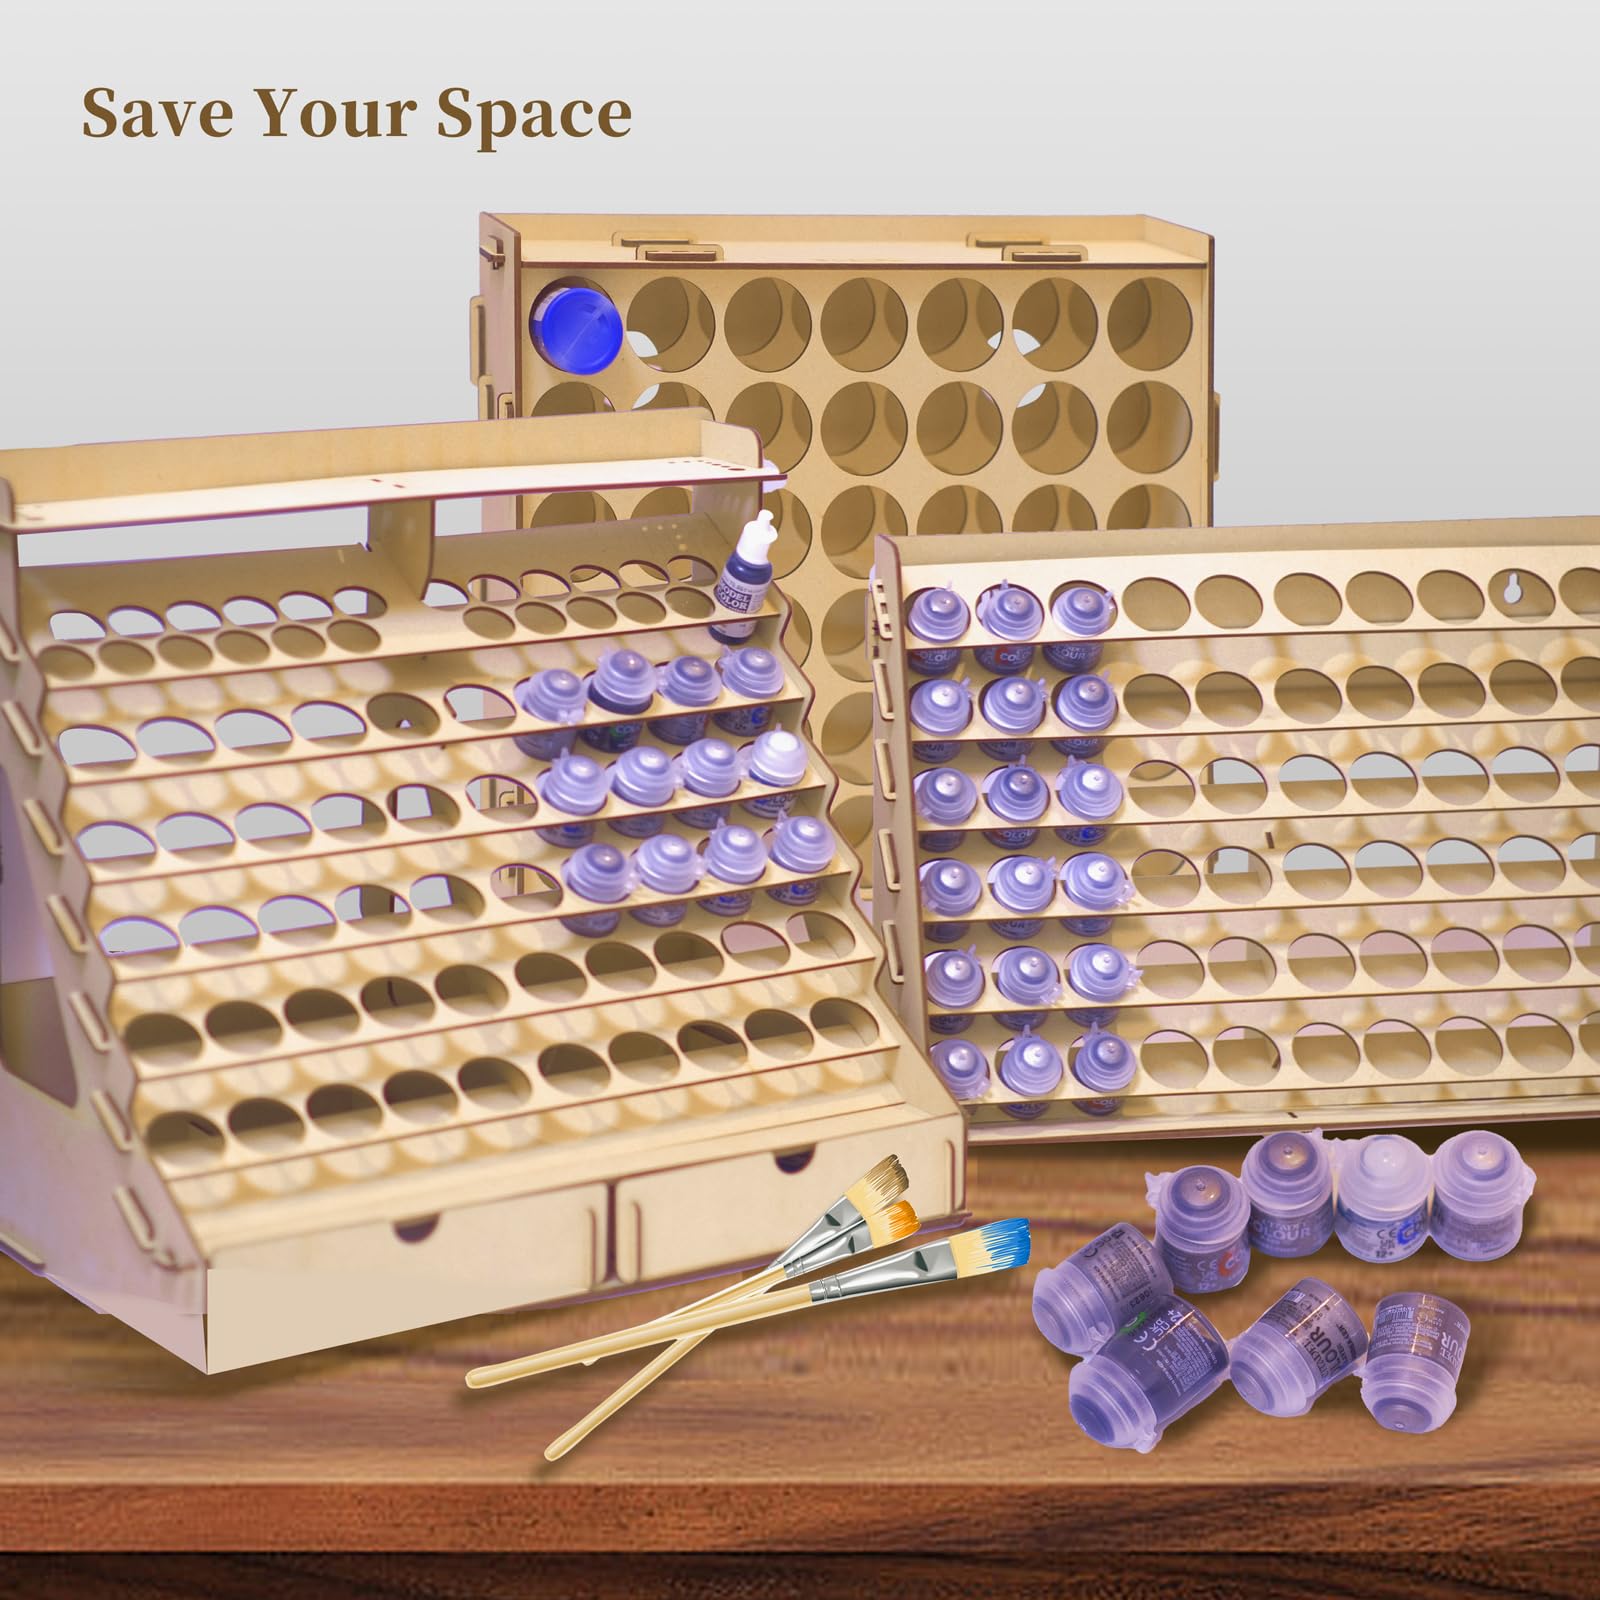 Craft Paint Storage-Modular Wooden Paint Organizer - Holds 74